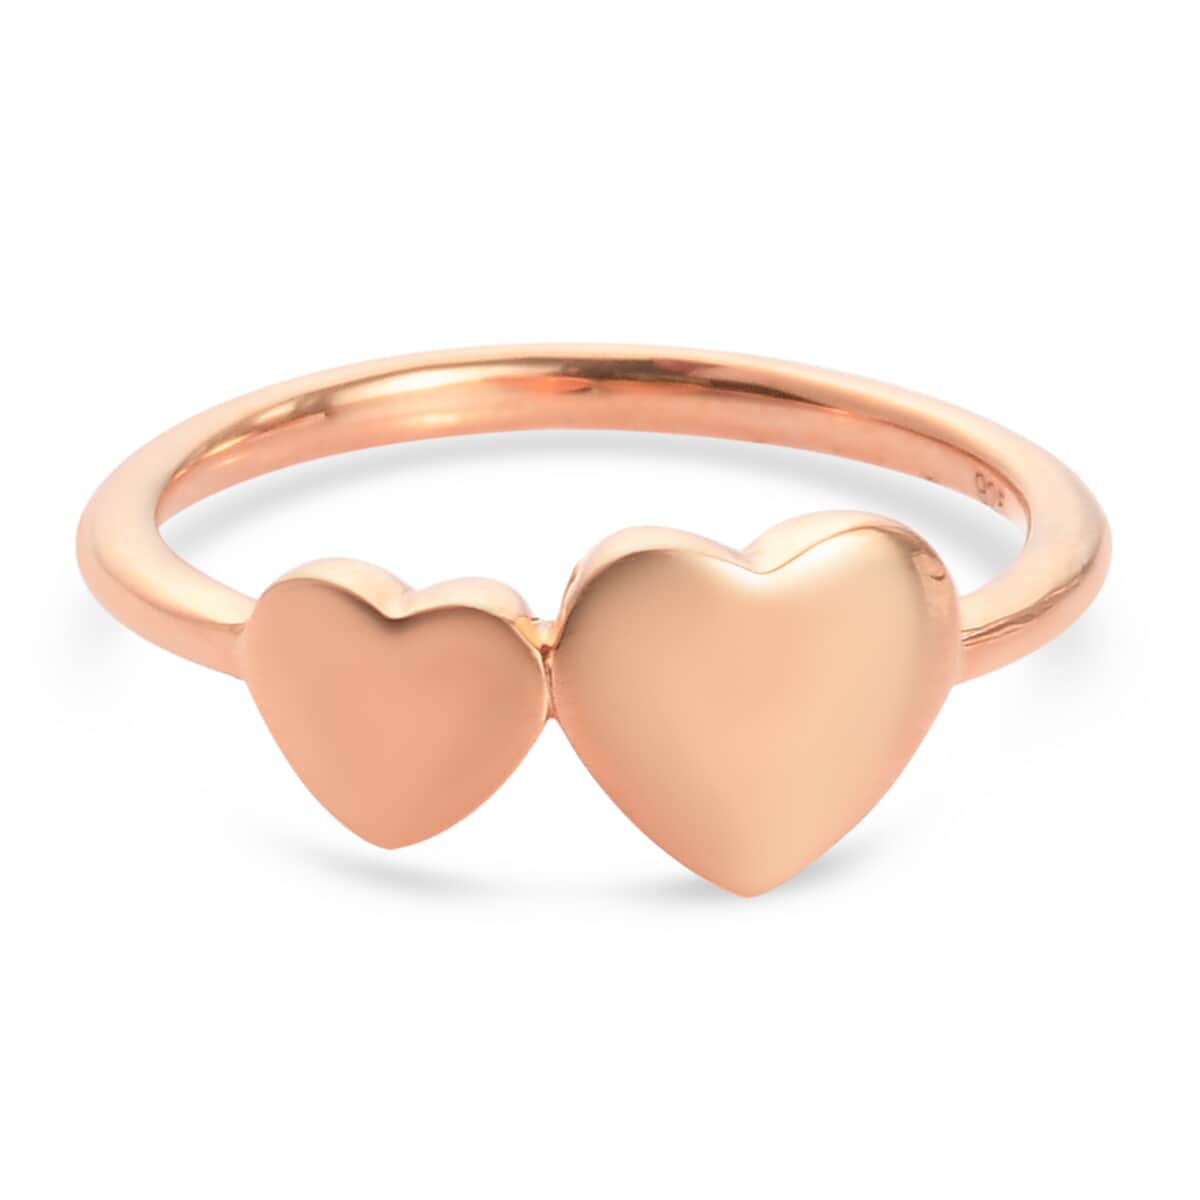 Chocolate Bar Initial Ring- Rose Gold Vermeil